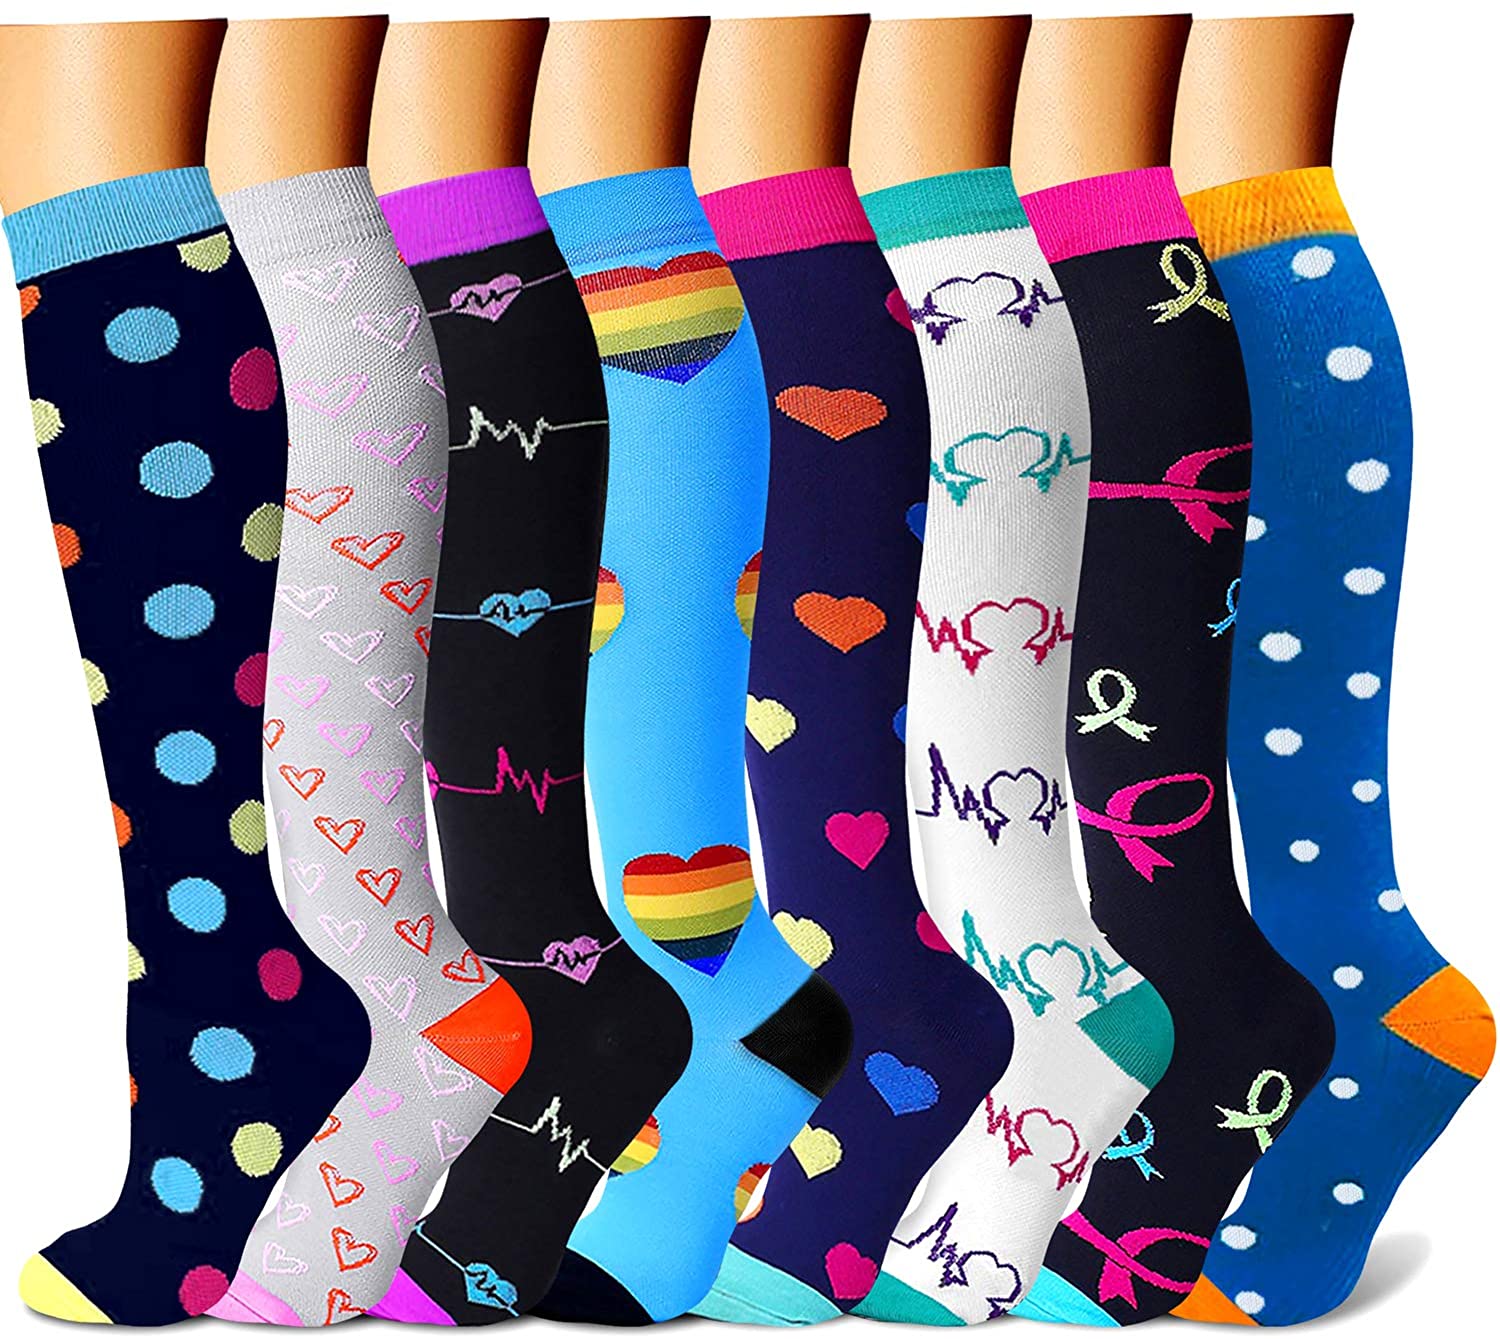 CHARMKING 15-20 mmHg Compression Socks for Women, 8-Pairs